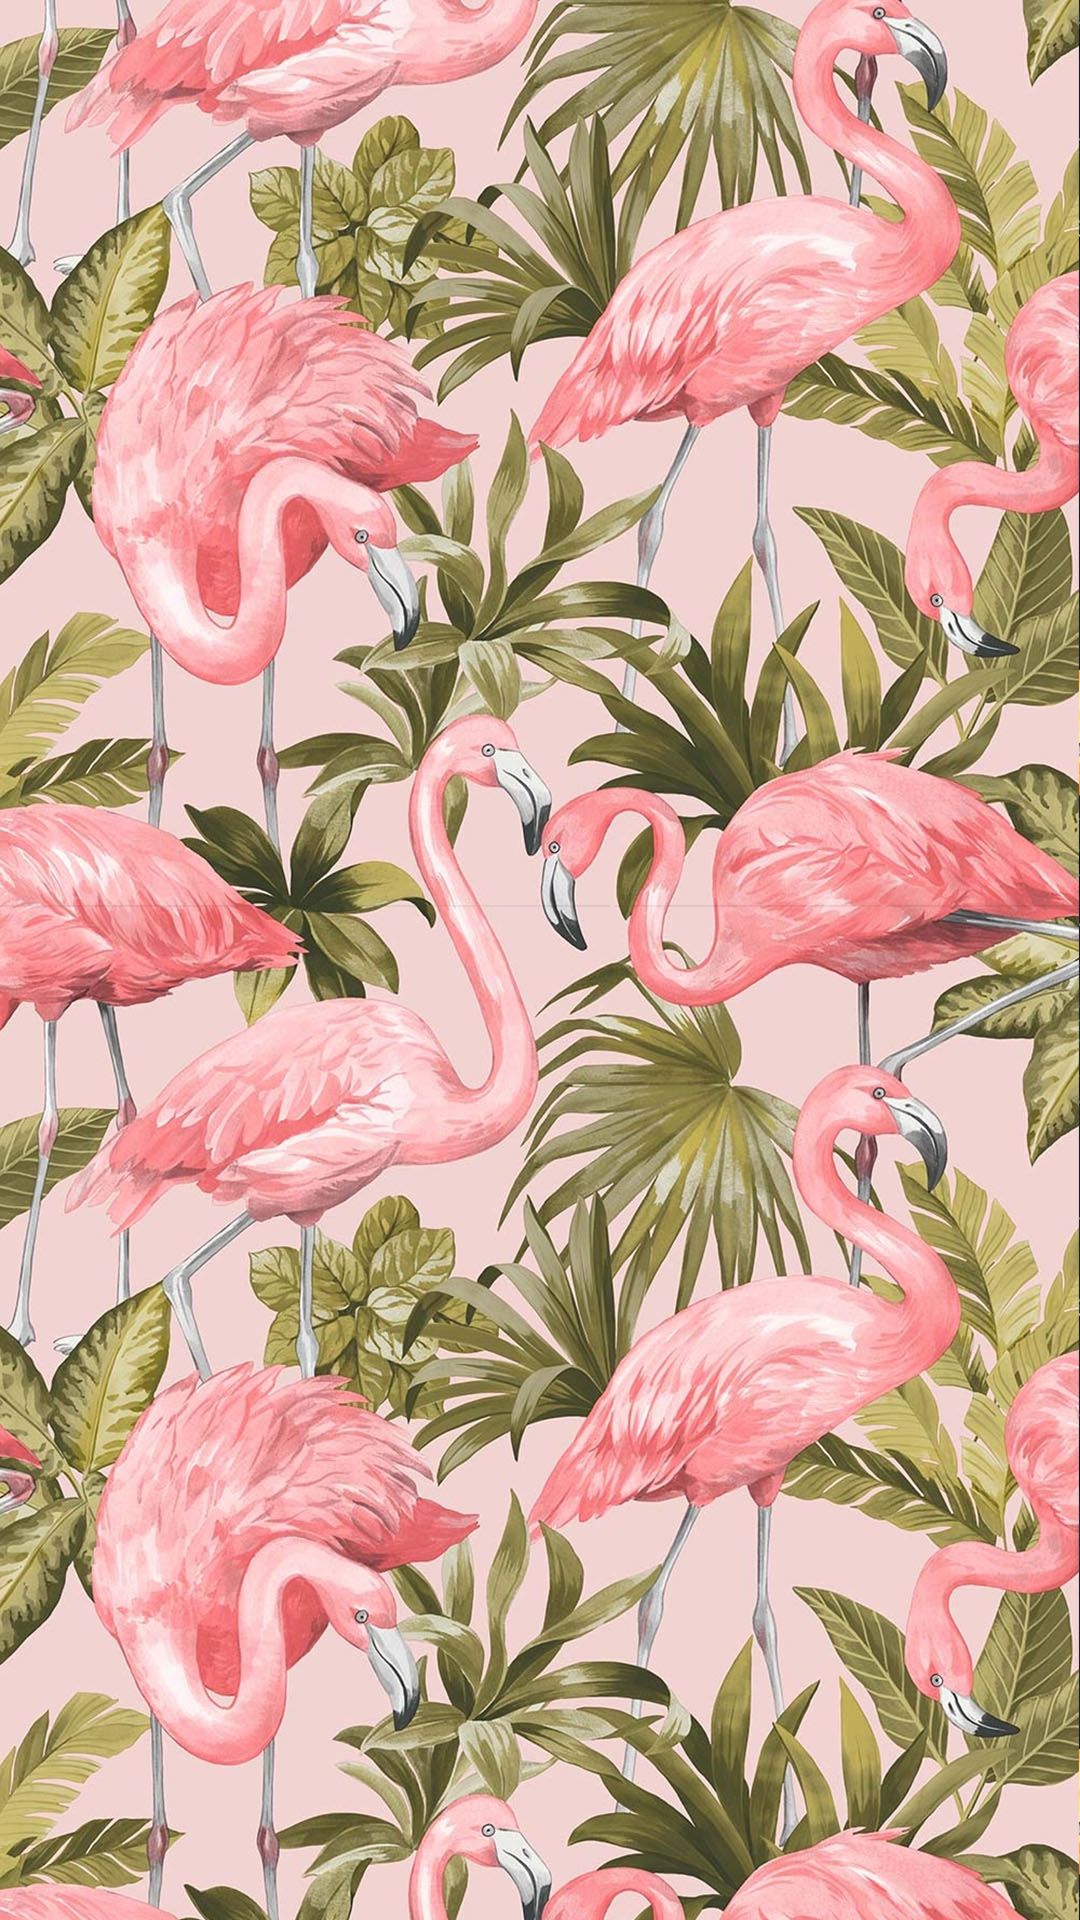 Free Download I Love Wallpaper Flamingo Wallpaper Blush Pink Lukisan Flamingo 1080x19 For Your Desktop Mobile Tablet Explore 25 Flamingo Background Vintage Flamingo Wallpaper Flamingo Wallpaper Flamingo Wallpaper Border